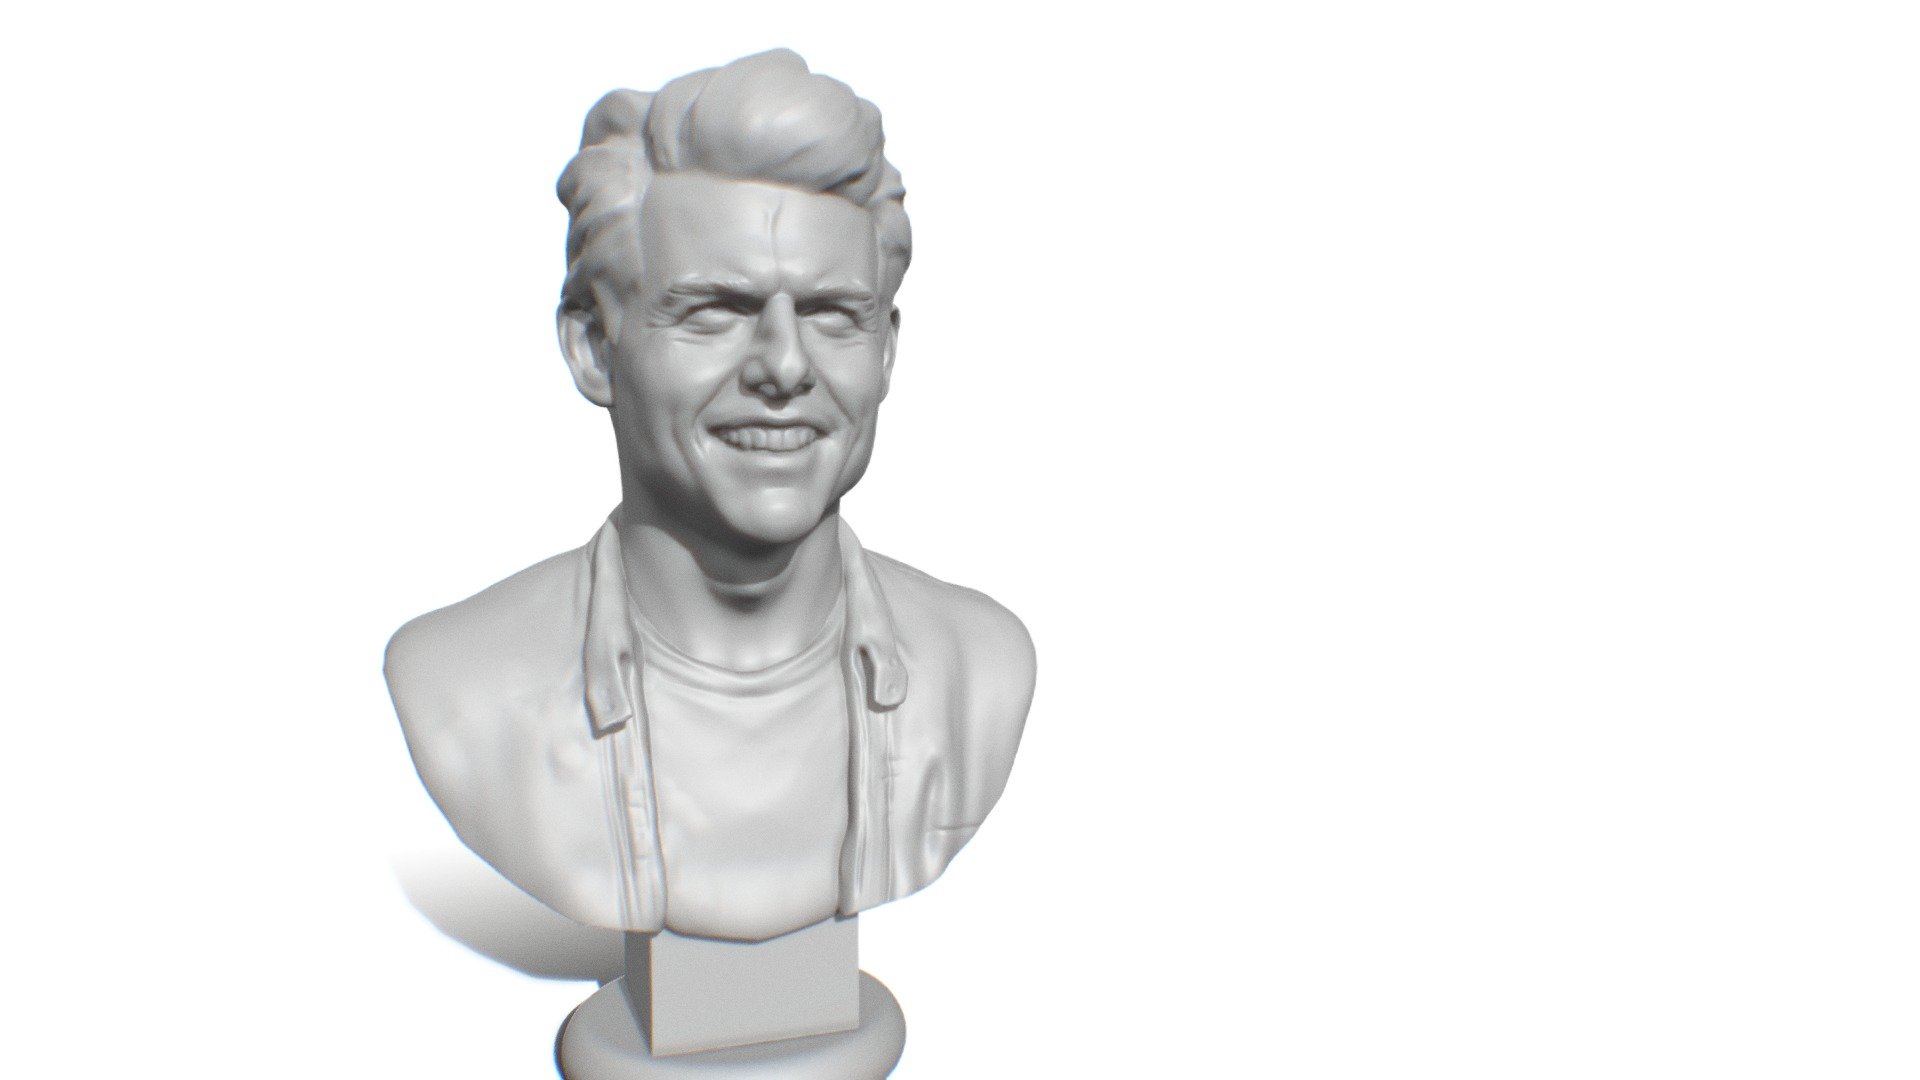 Tom Cruise for print - Tom Cruise - Buy Royalty Free 3D model by irakli_chkonia 3d model